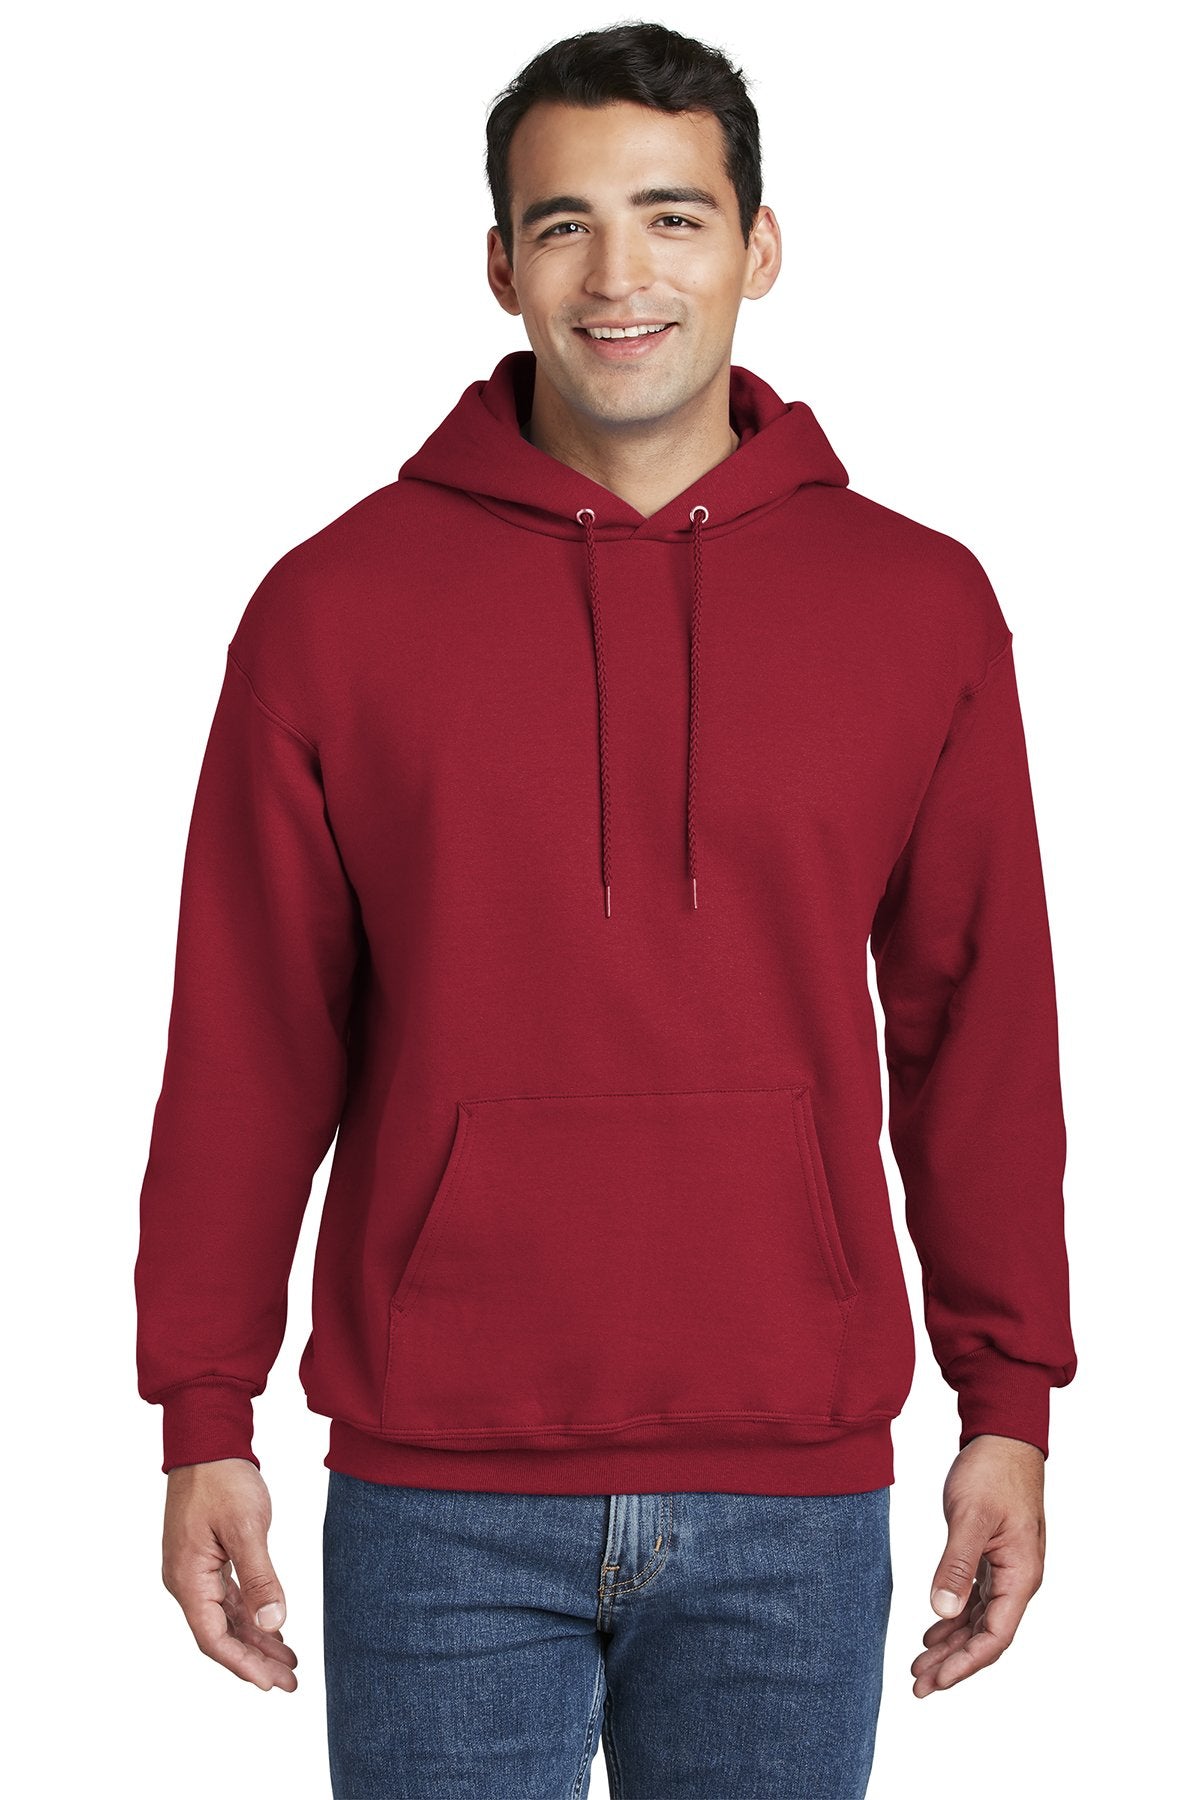 hanes deep red f170 custom embroidered sweatshirts